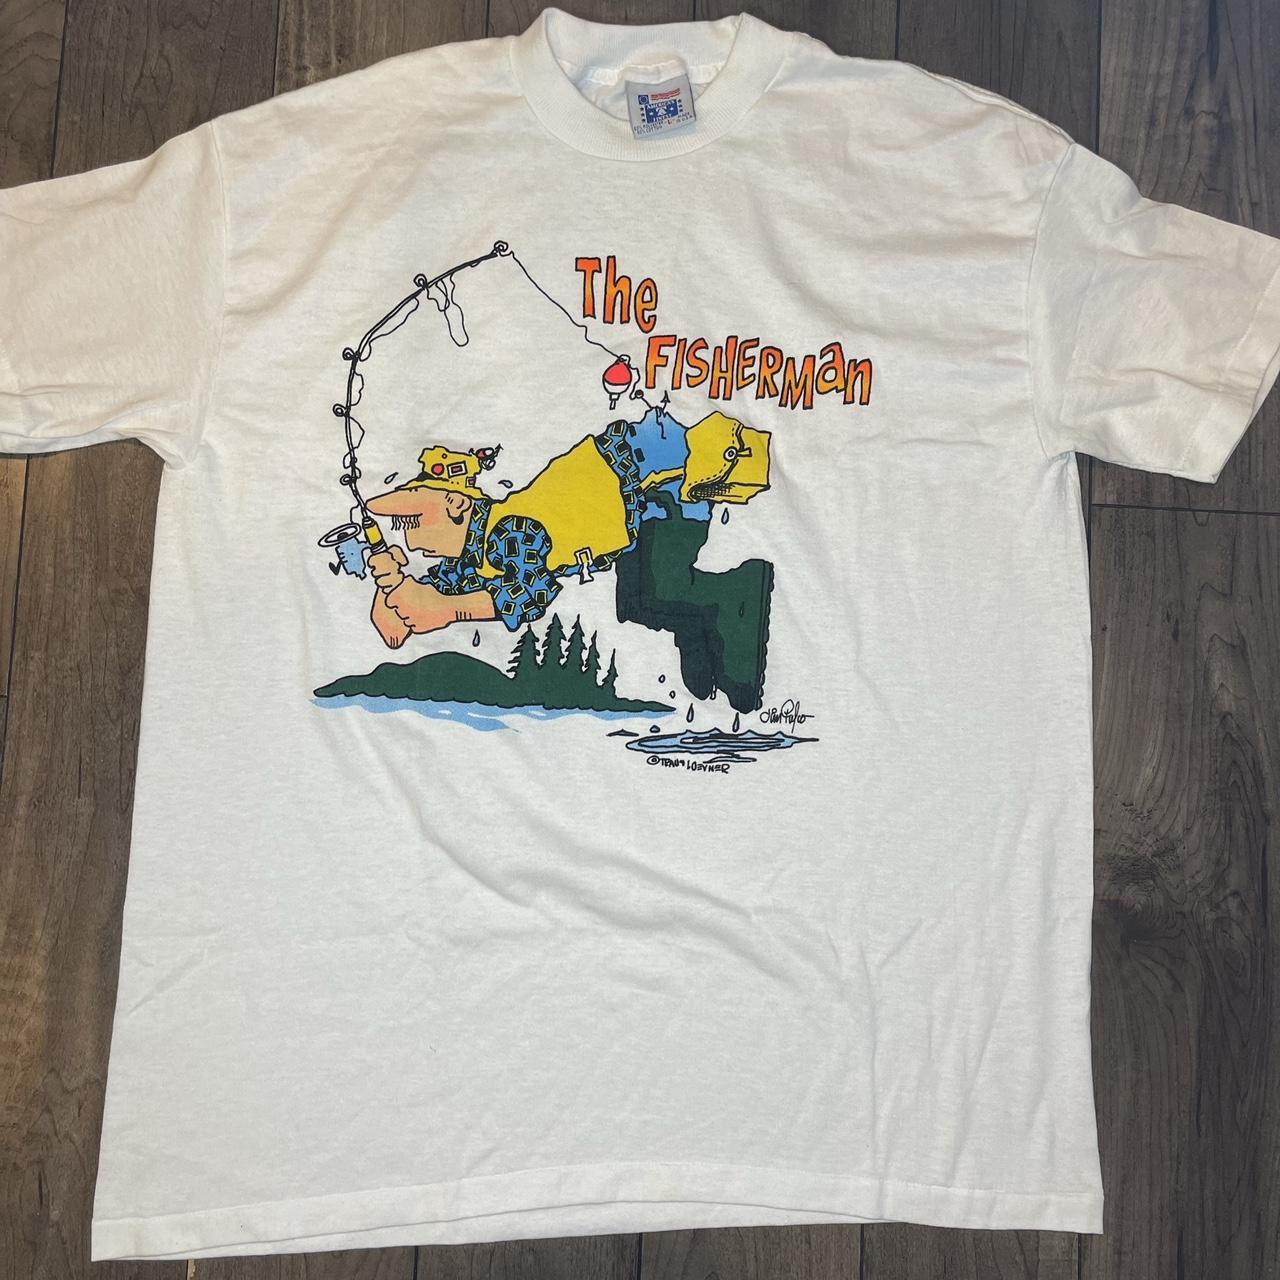 90s Vintage “The Fisherman” fishing art t-shirt.